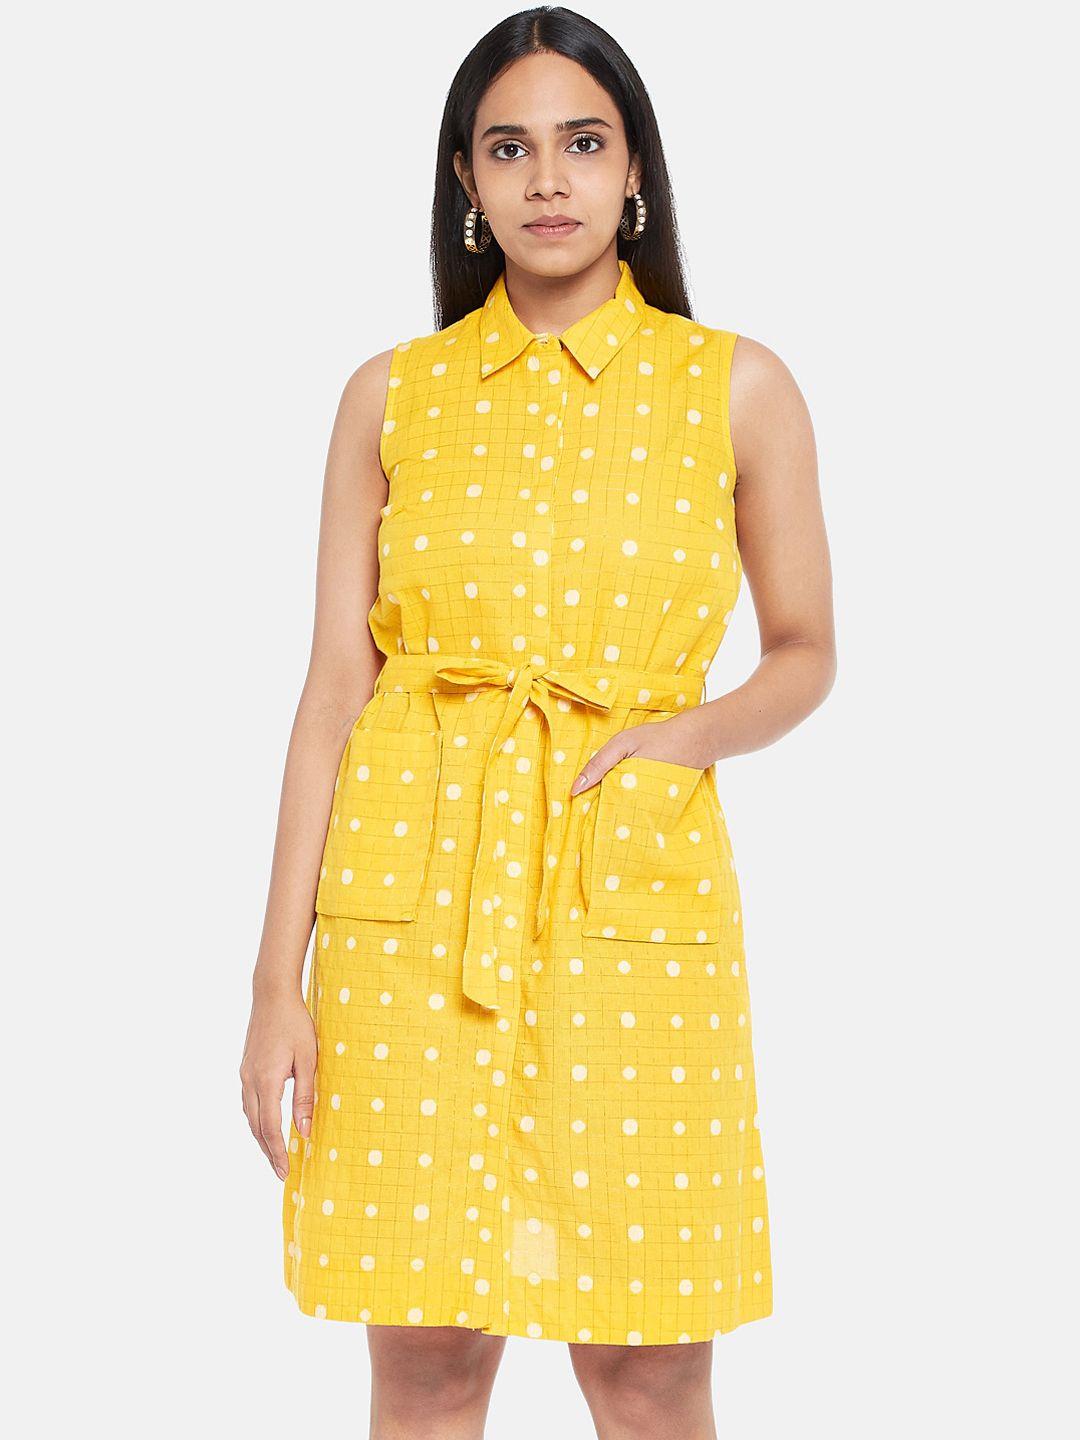 akkriti-by-pantaloons-yellow-polka-dots-shirt-dress